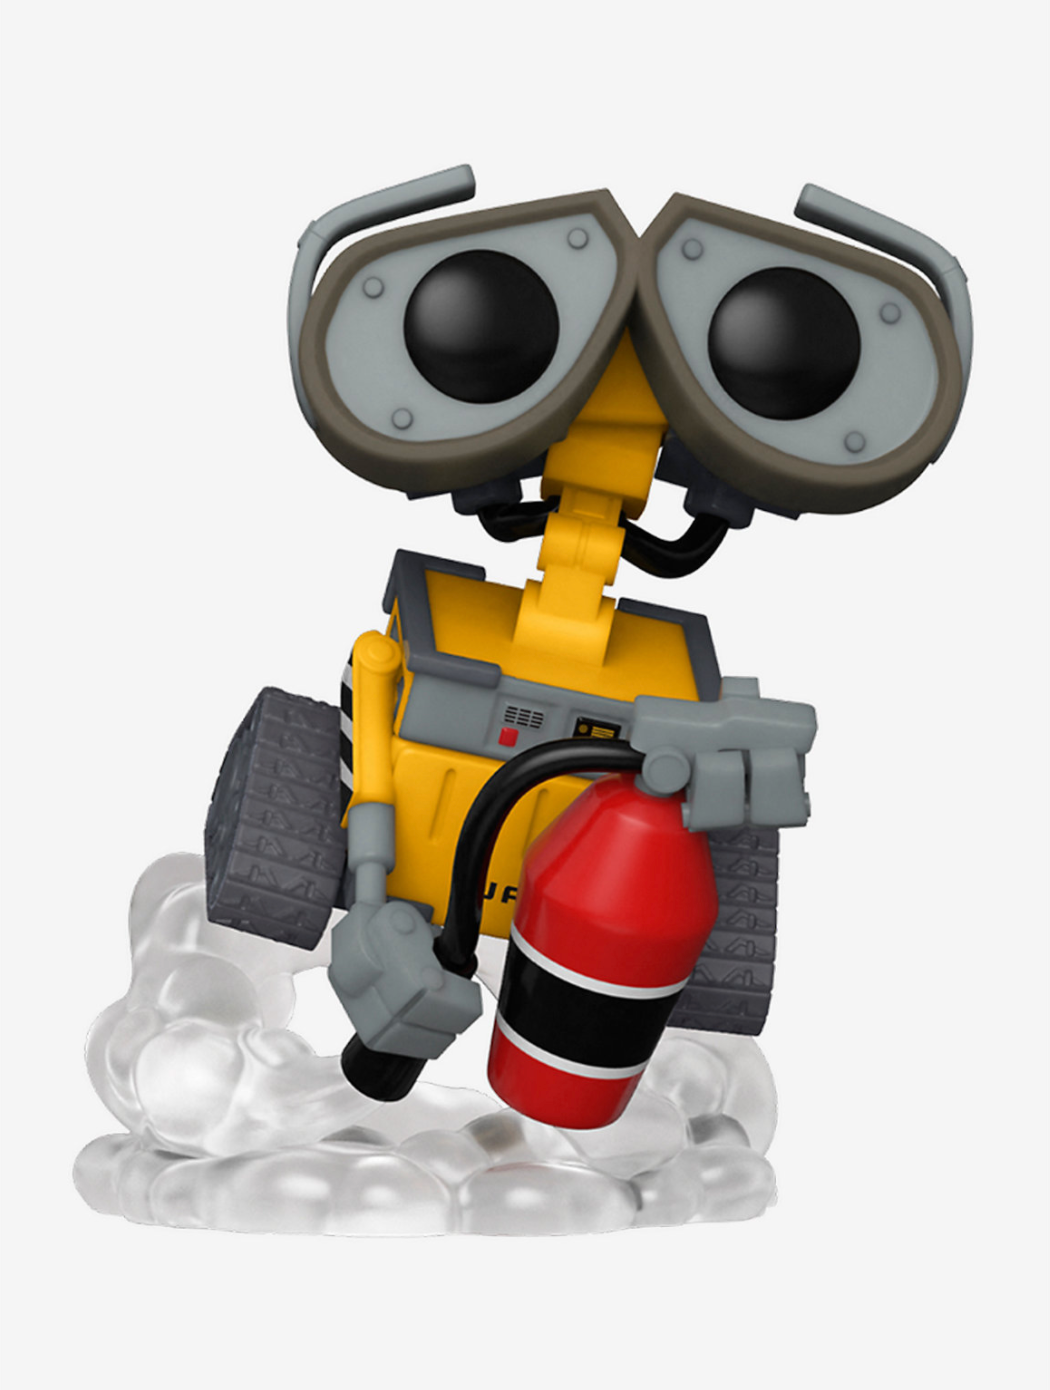 Funko Pop! Disney Pixar WALL-E With Fire Extinguisher Vinyl FIgure